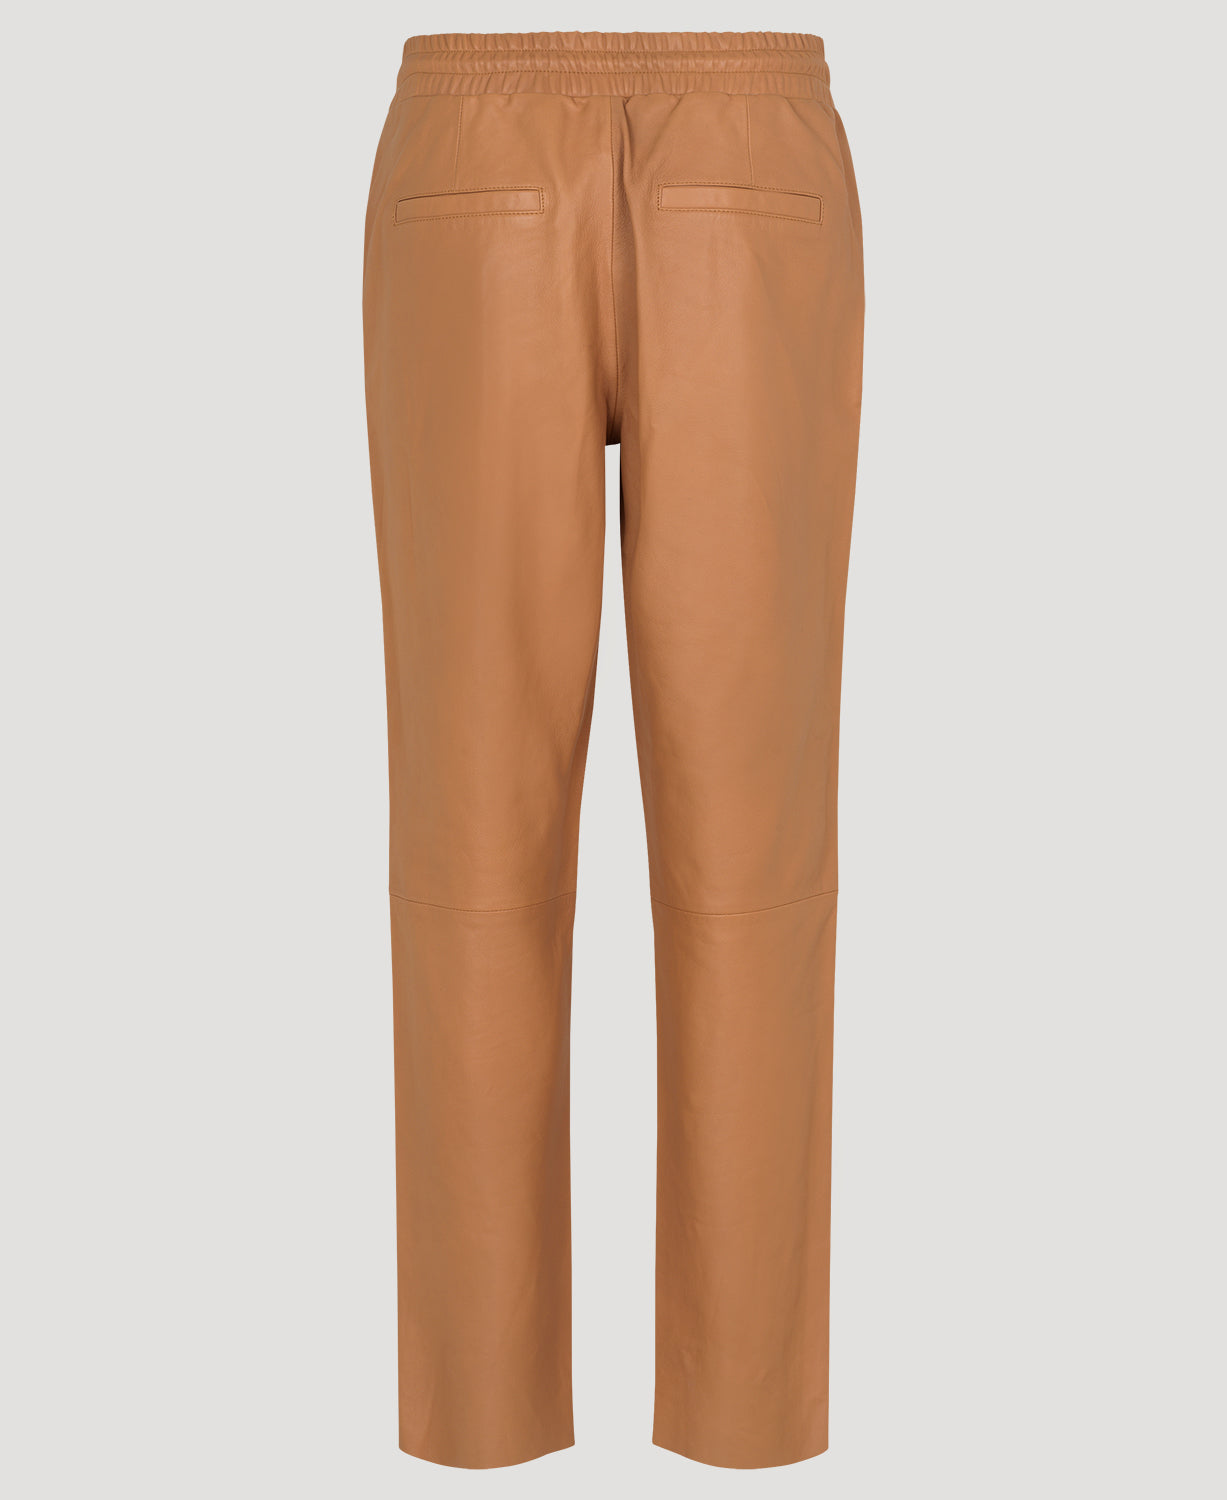 Taz Leather Pants - Camel